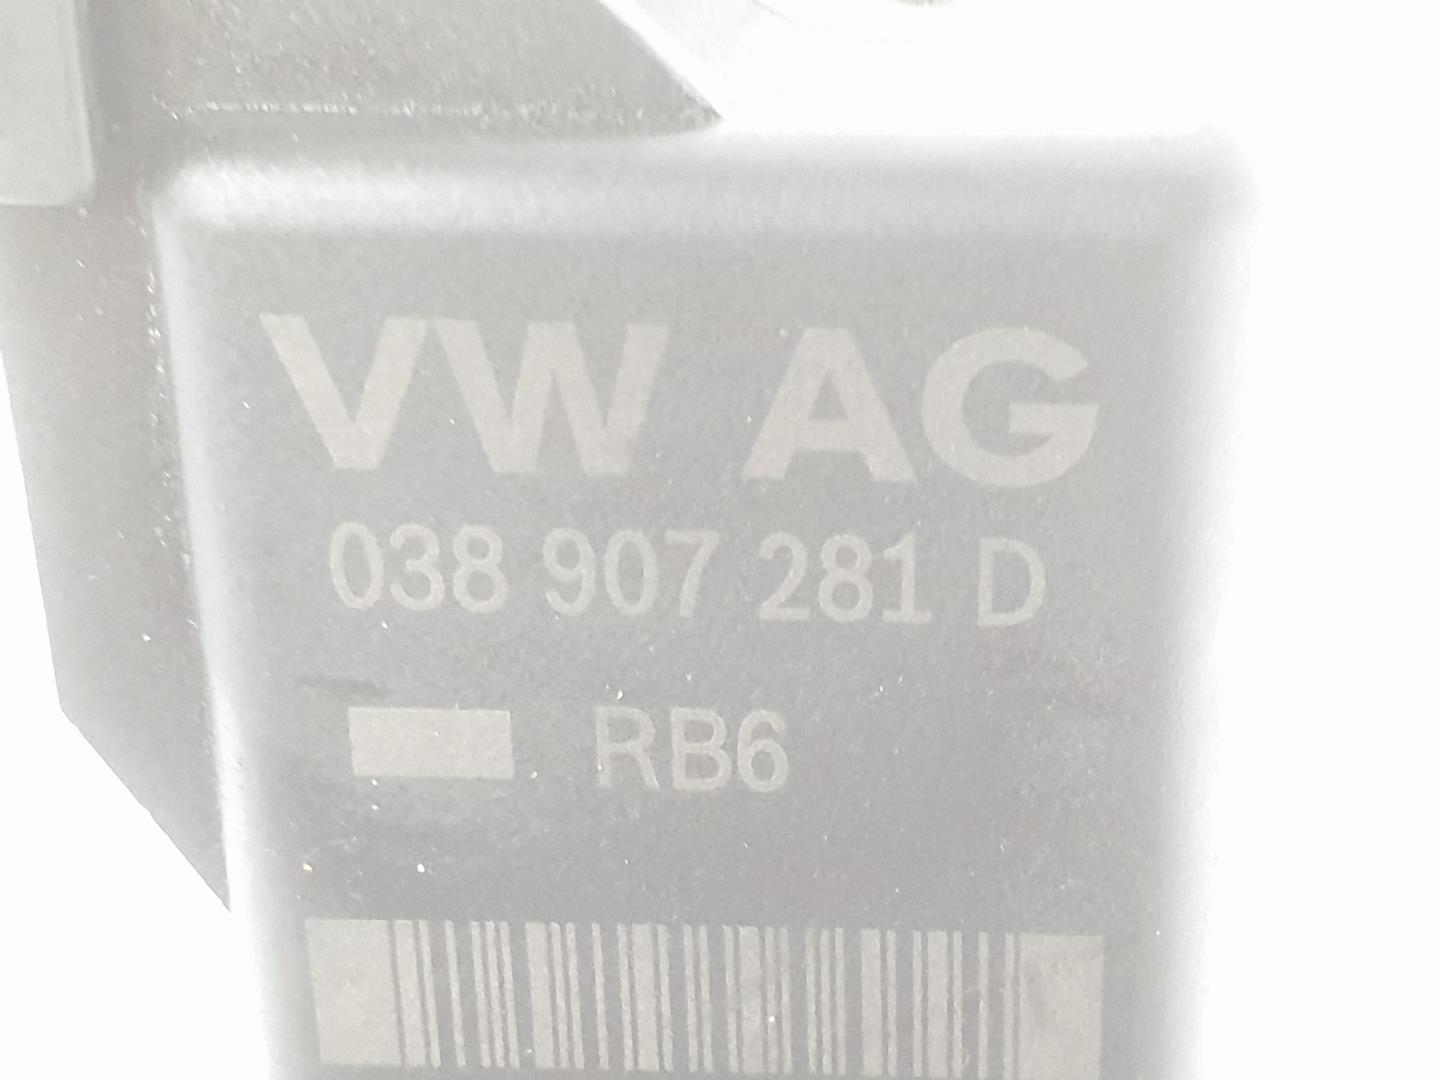 VOLKSWAGEN Golf 6 generation (2008-2015) Other Control Units 038907281D, 038907281D 19825388